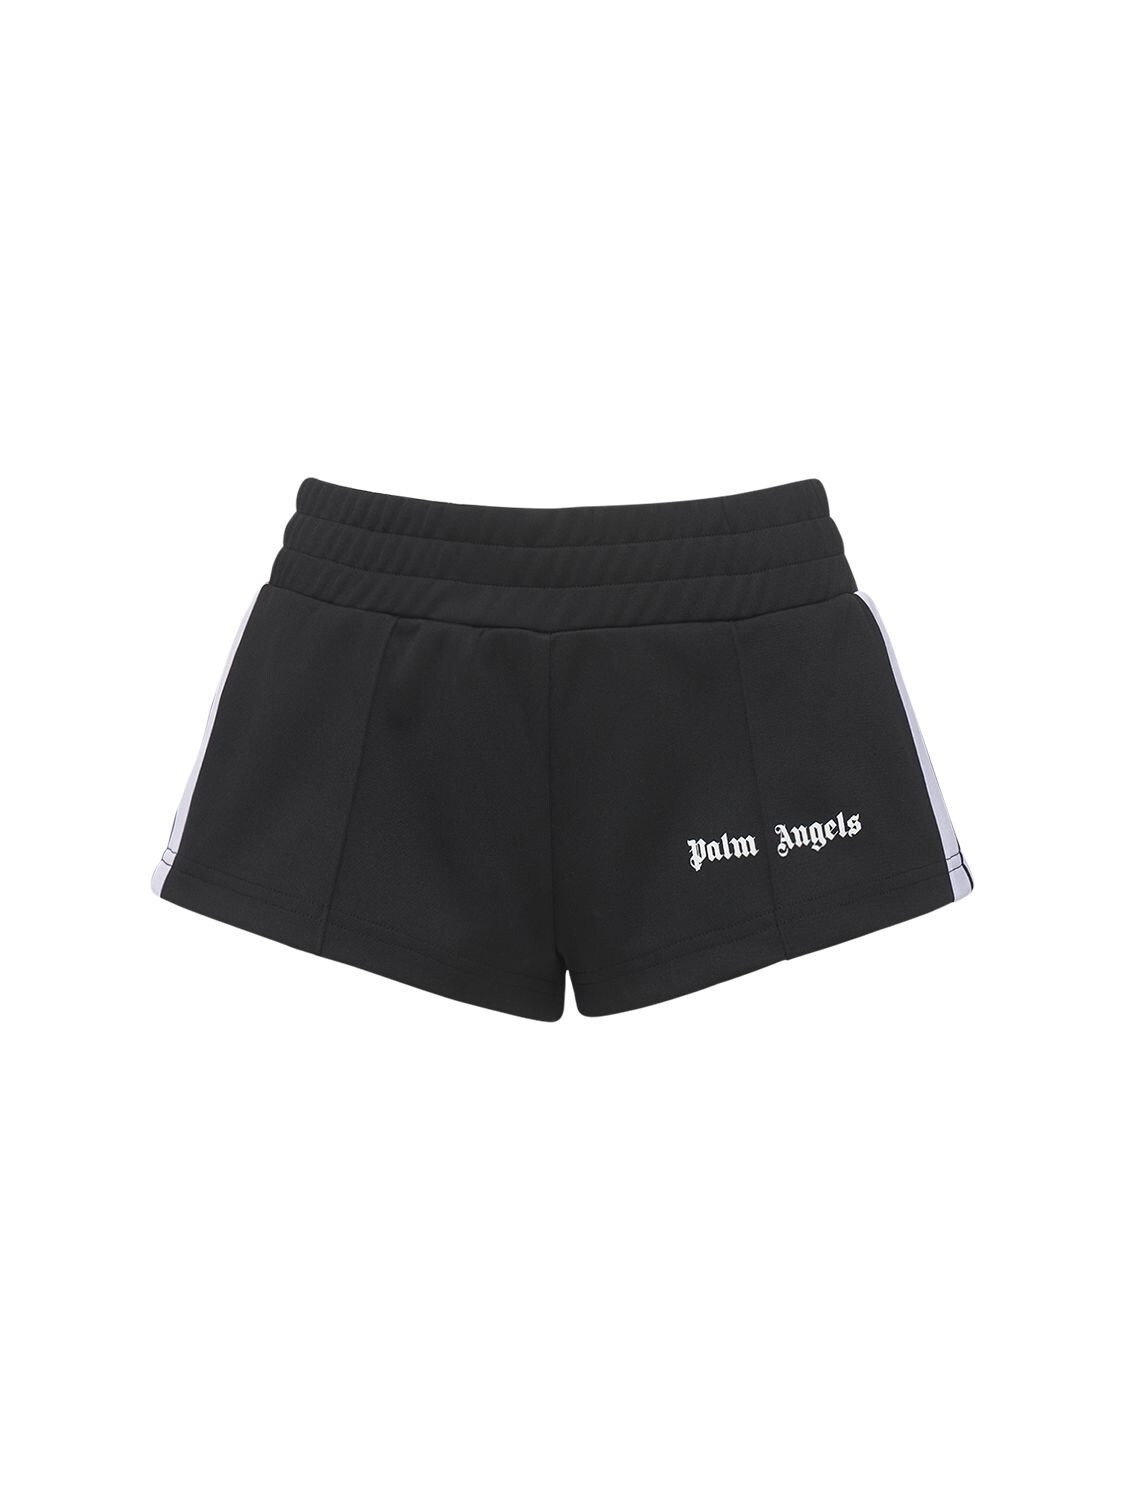 PALM ANGELS LOGO醋酸纤维短裤,73IRT9005-MTAWMQ2